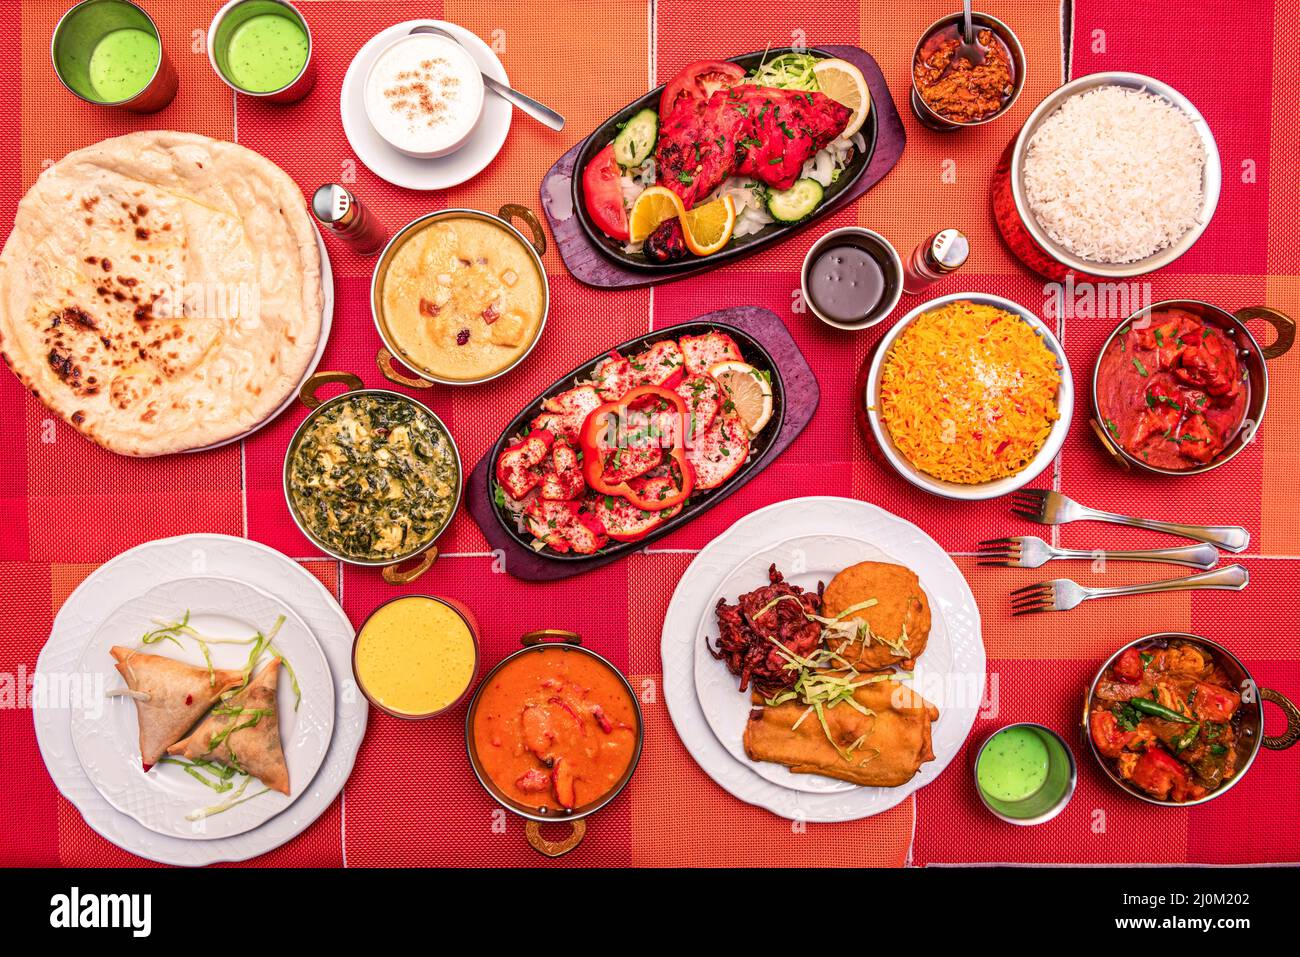 Colorful Indian food plates with various types of curries, naan, palak paneer, lamb, tandoori chicken, tikka masala, appetizers, basmati rice, falafel Stock Photo